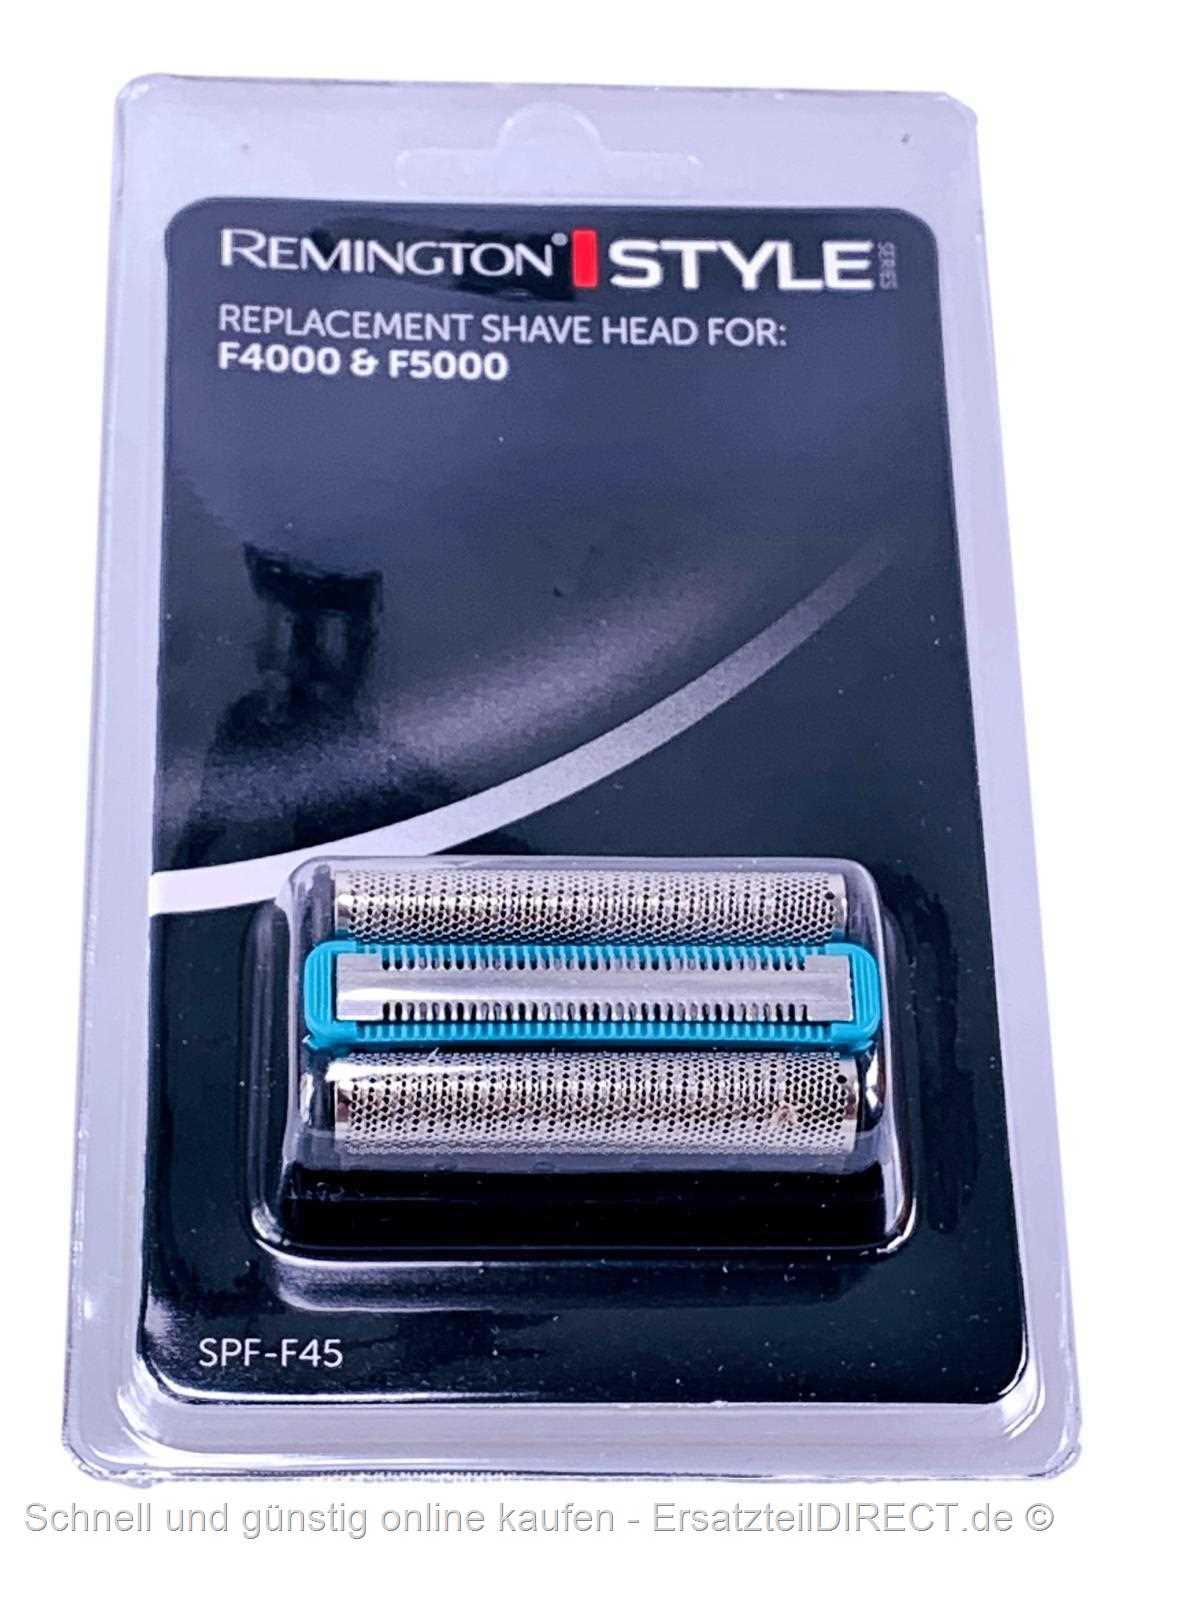 Remington Rasierer Kombipack SPF-F45 F4000 günstig kaufen F5000 bei SPFF45 SPF-F45